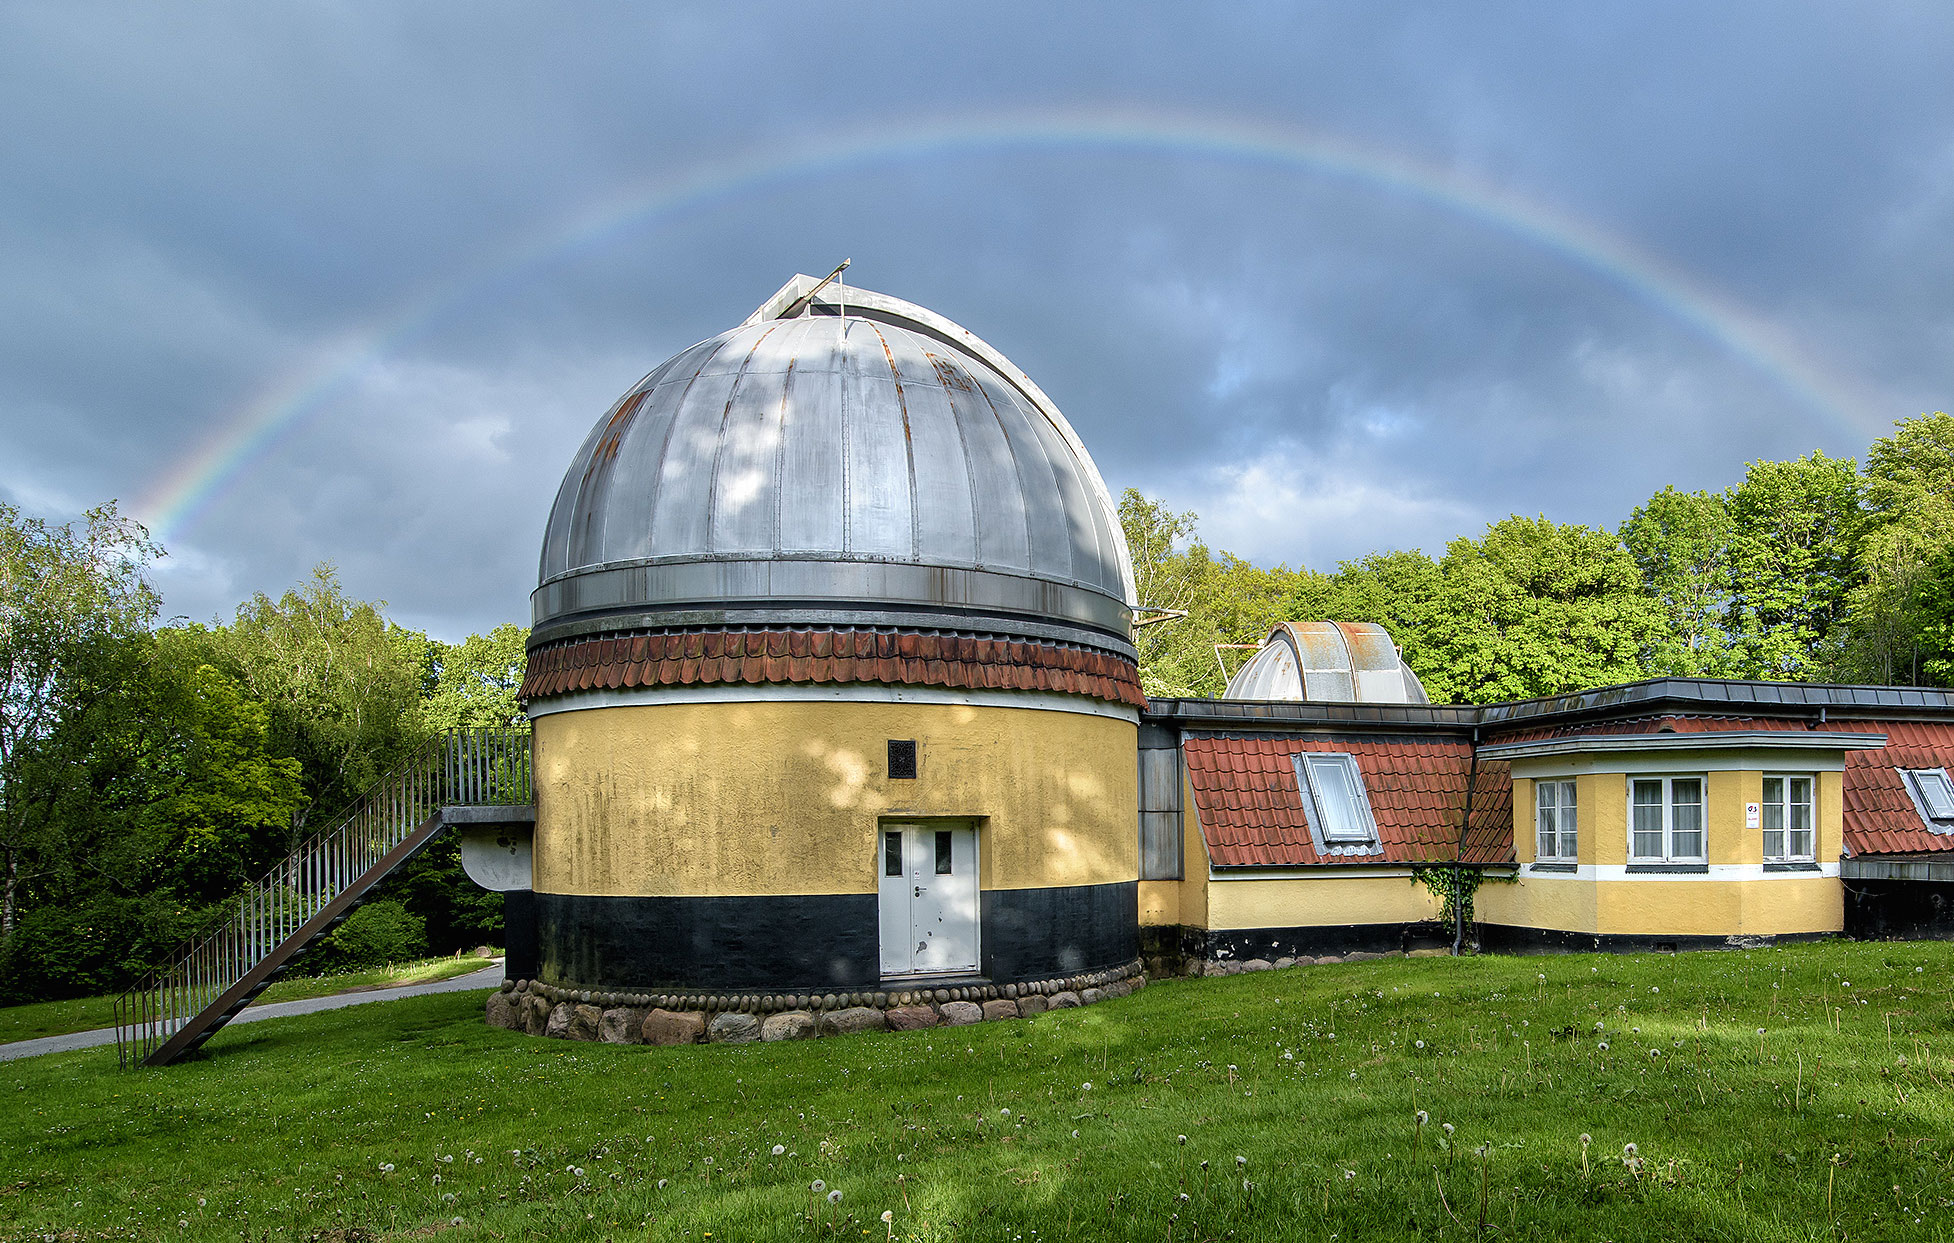 Ole Rømer Observatoriet